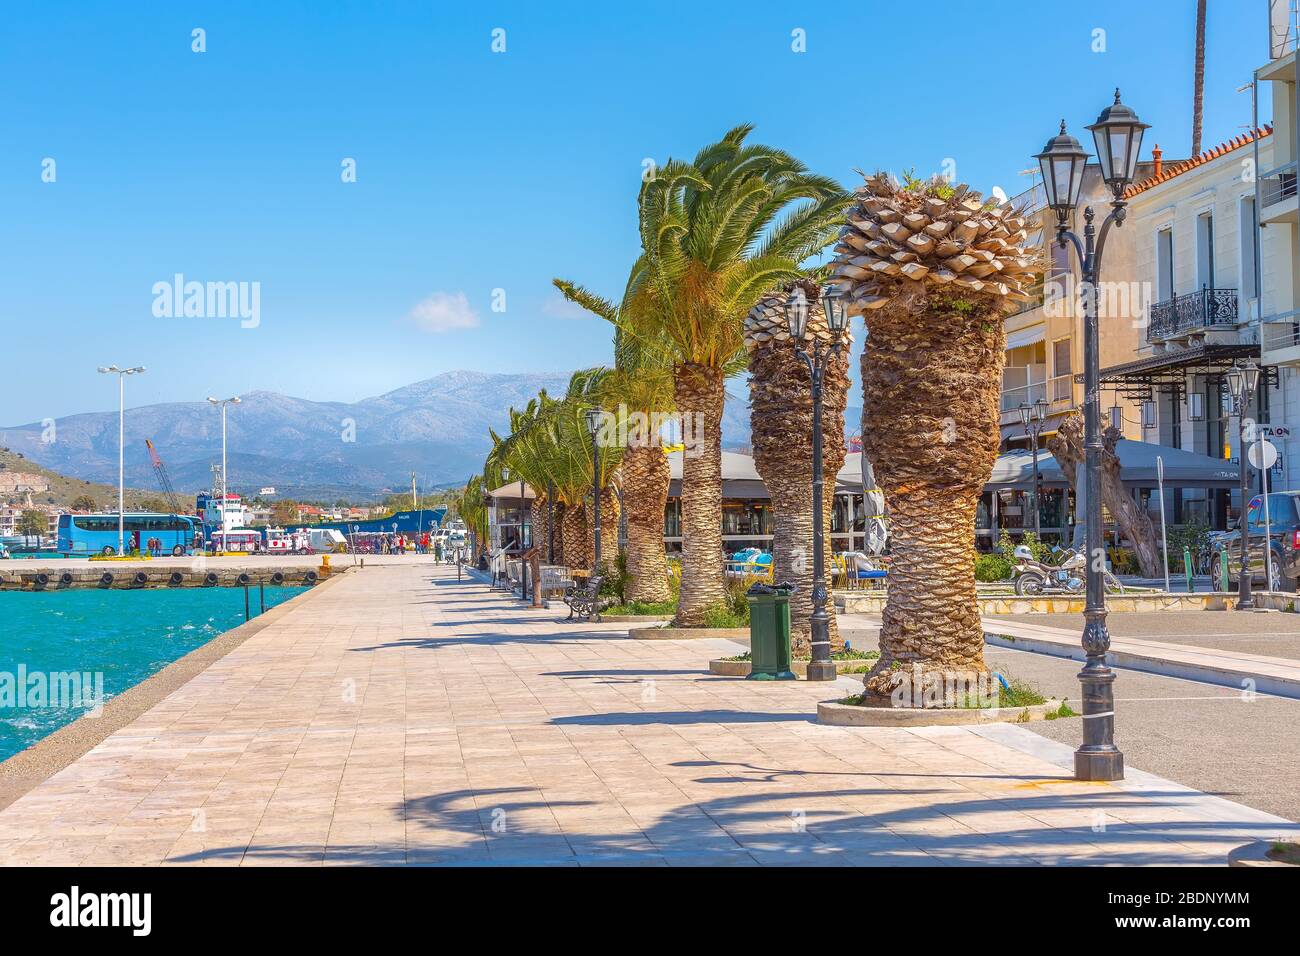 Nafplio, Greece - March 30, 2019: Promenade with palm trees sea in Nafplion, Peloponnese Stock Photo